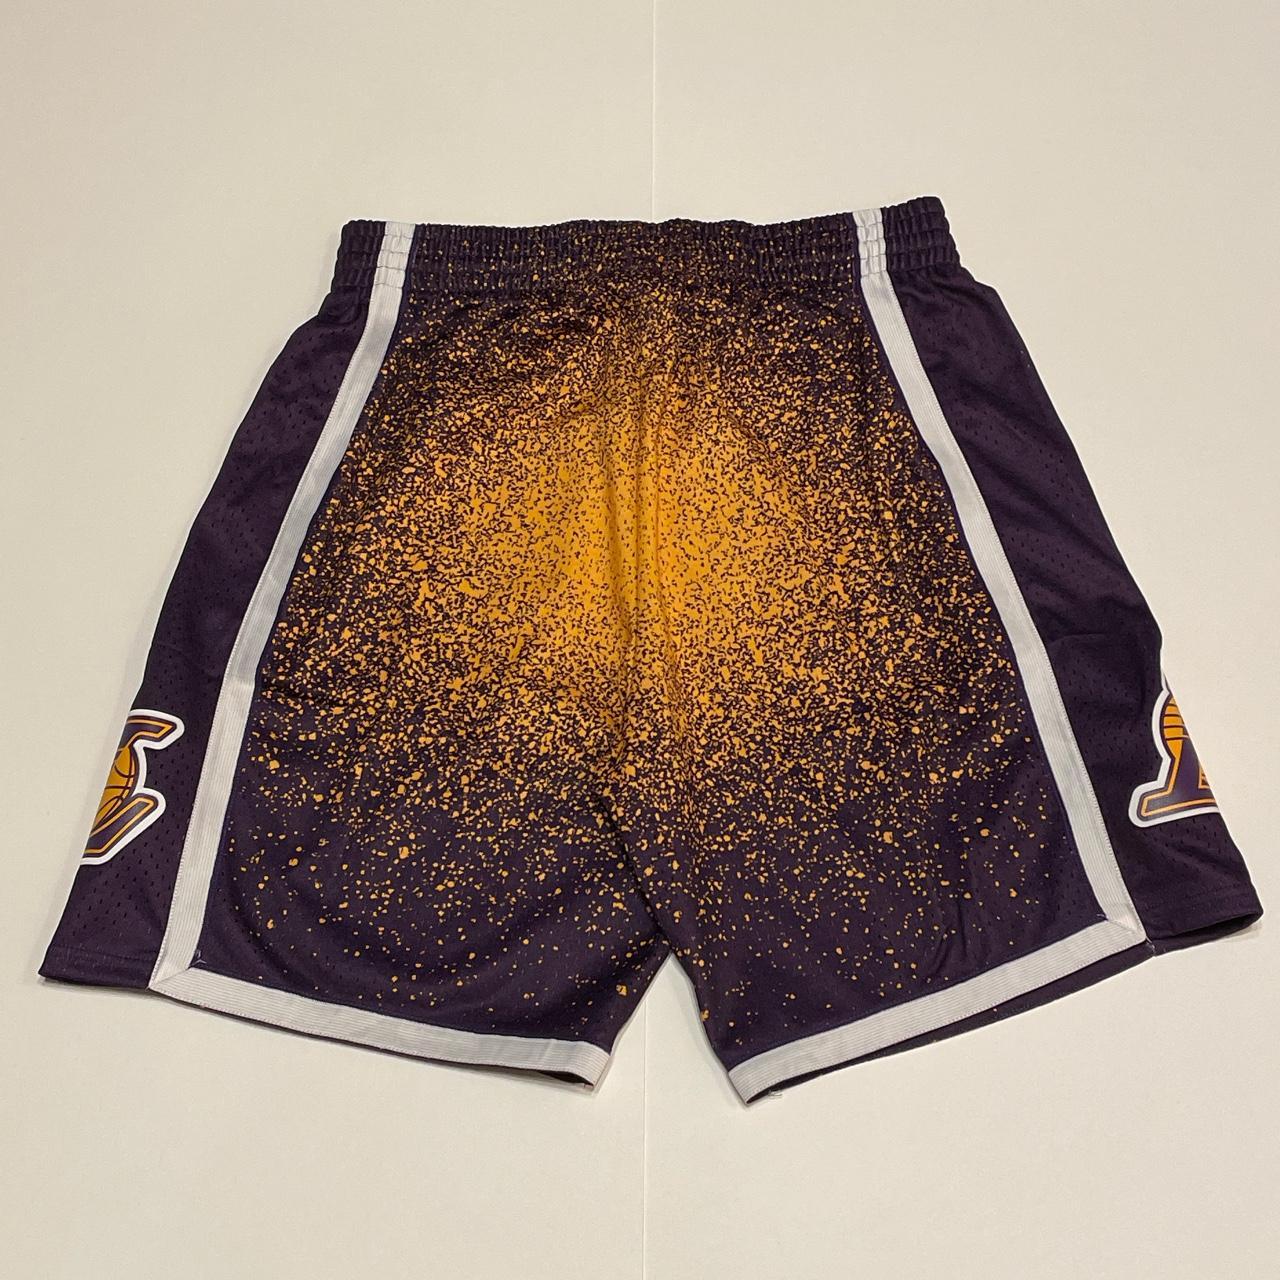 Mitchell & Ness shorts Los Angeles Lakers yellow Swingman Shorts